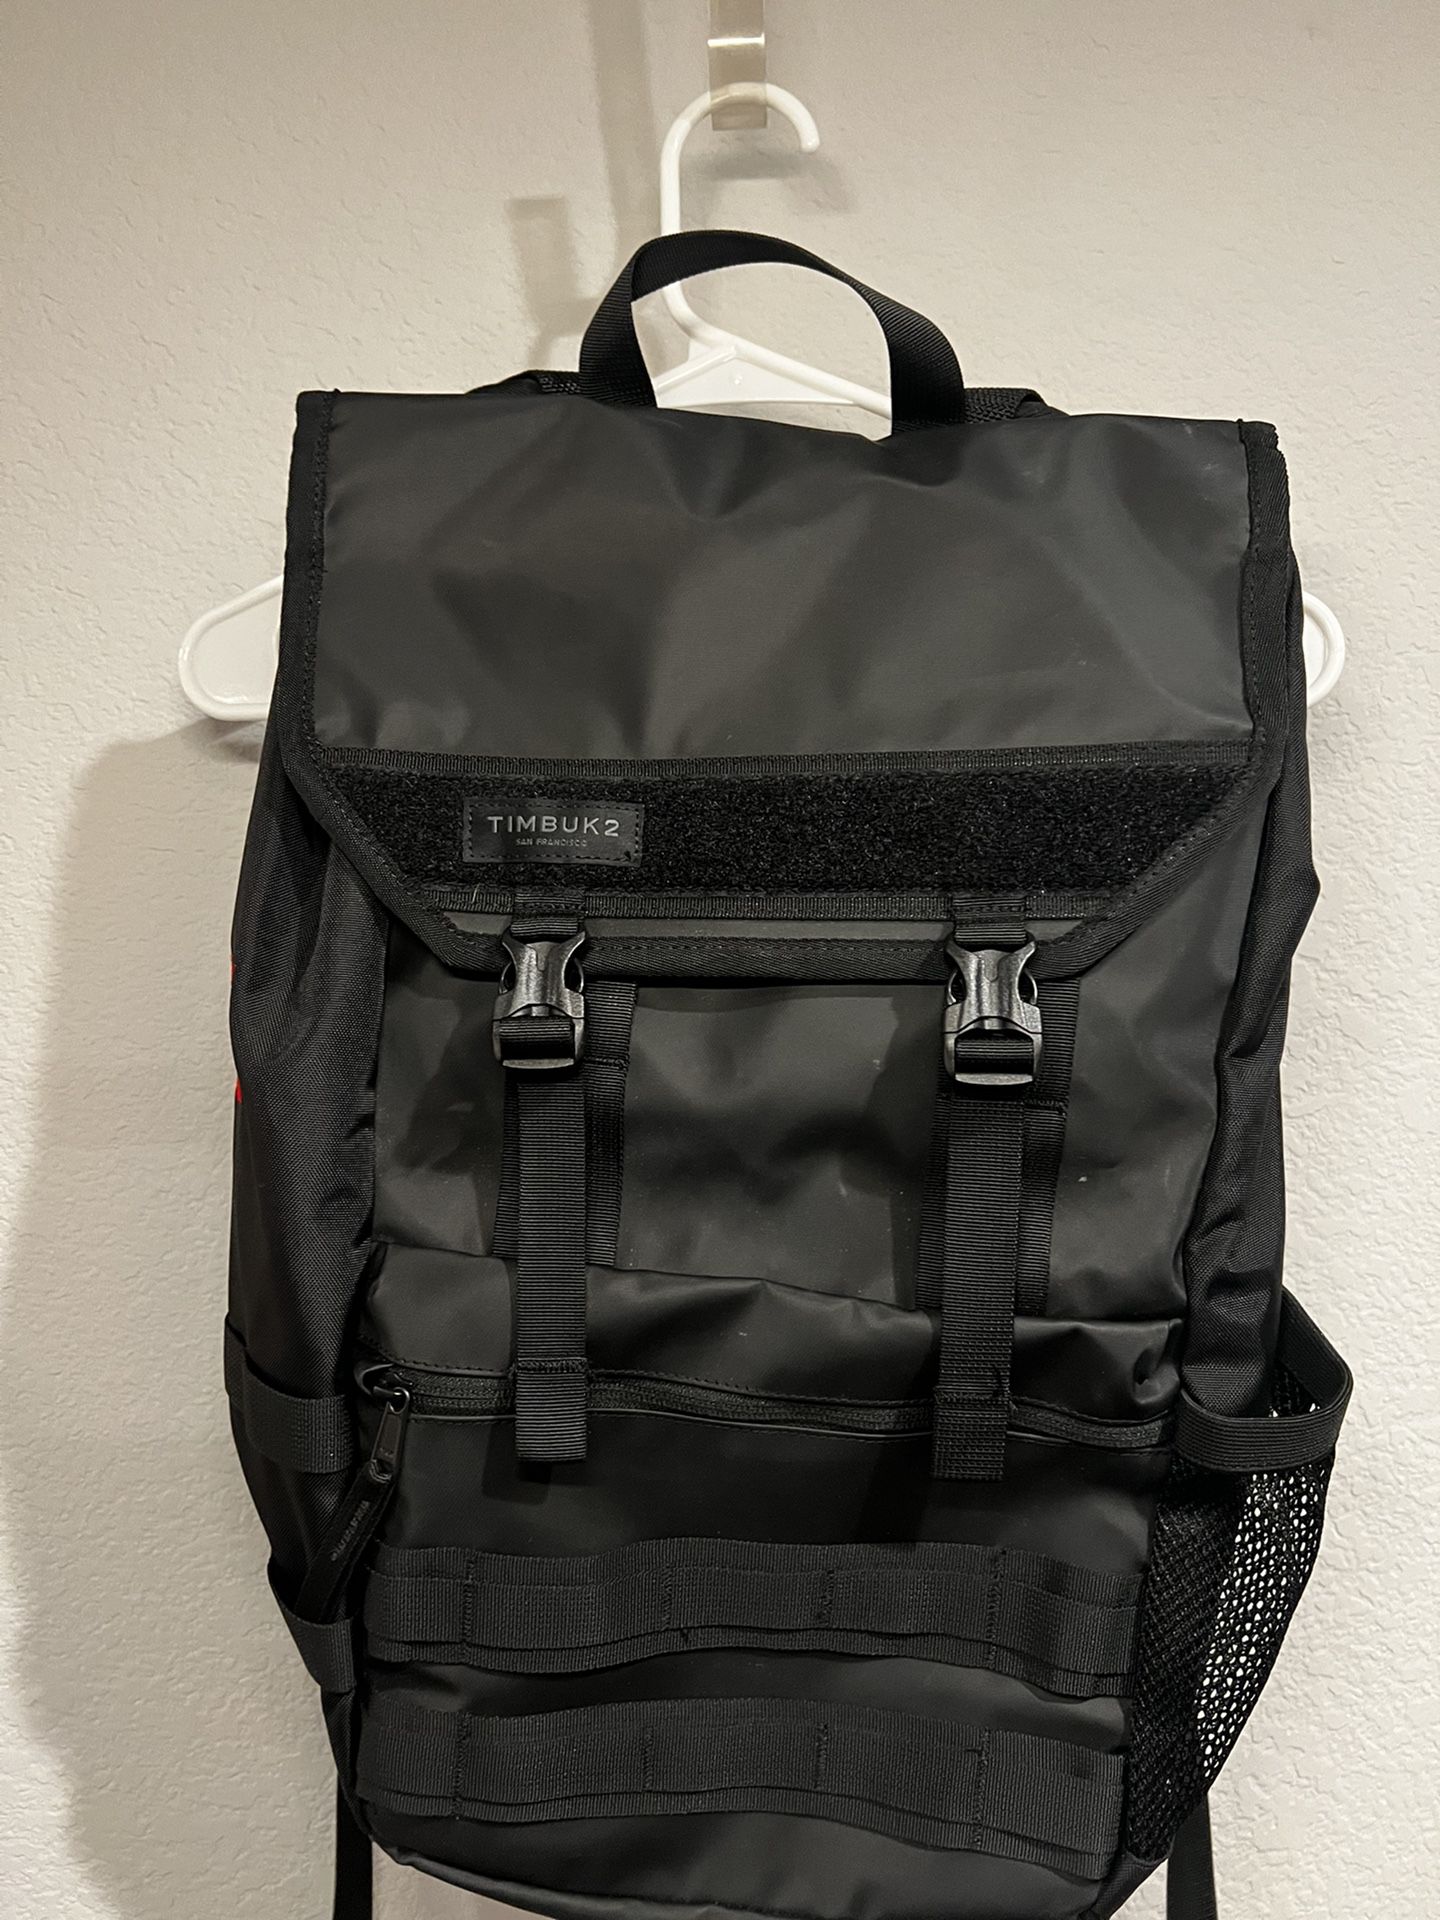 Timbuk2 Backpack (Netflix product Giveaway)